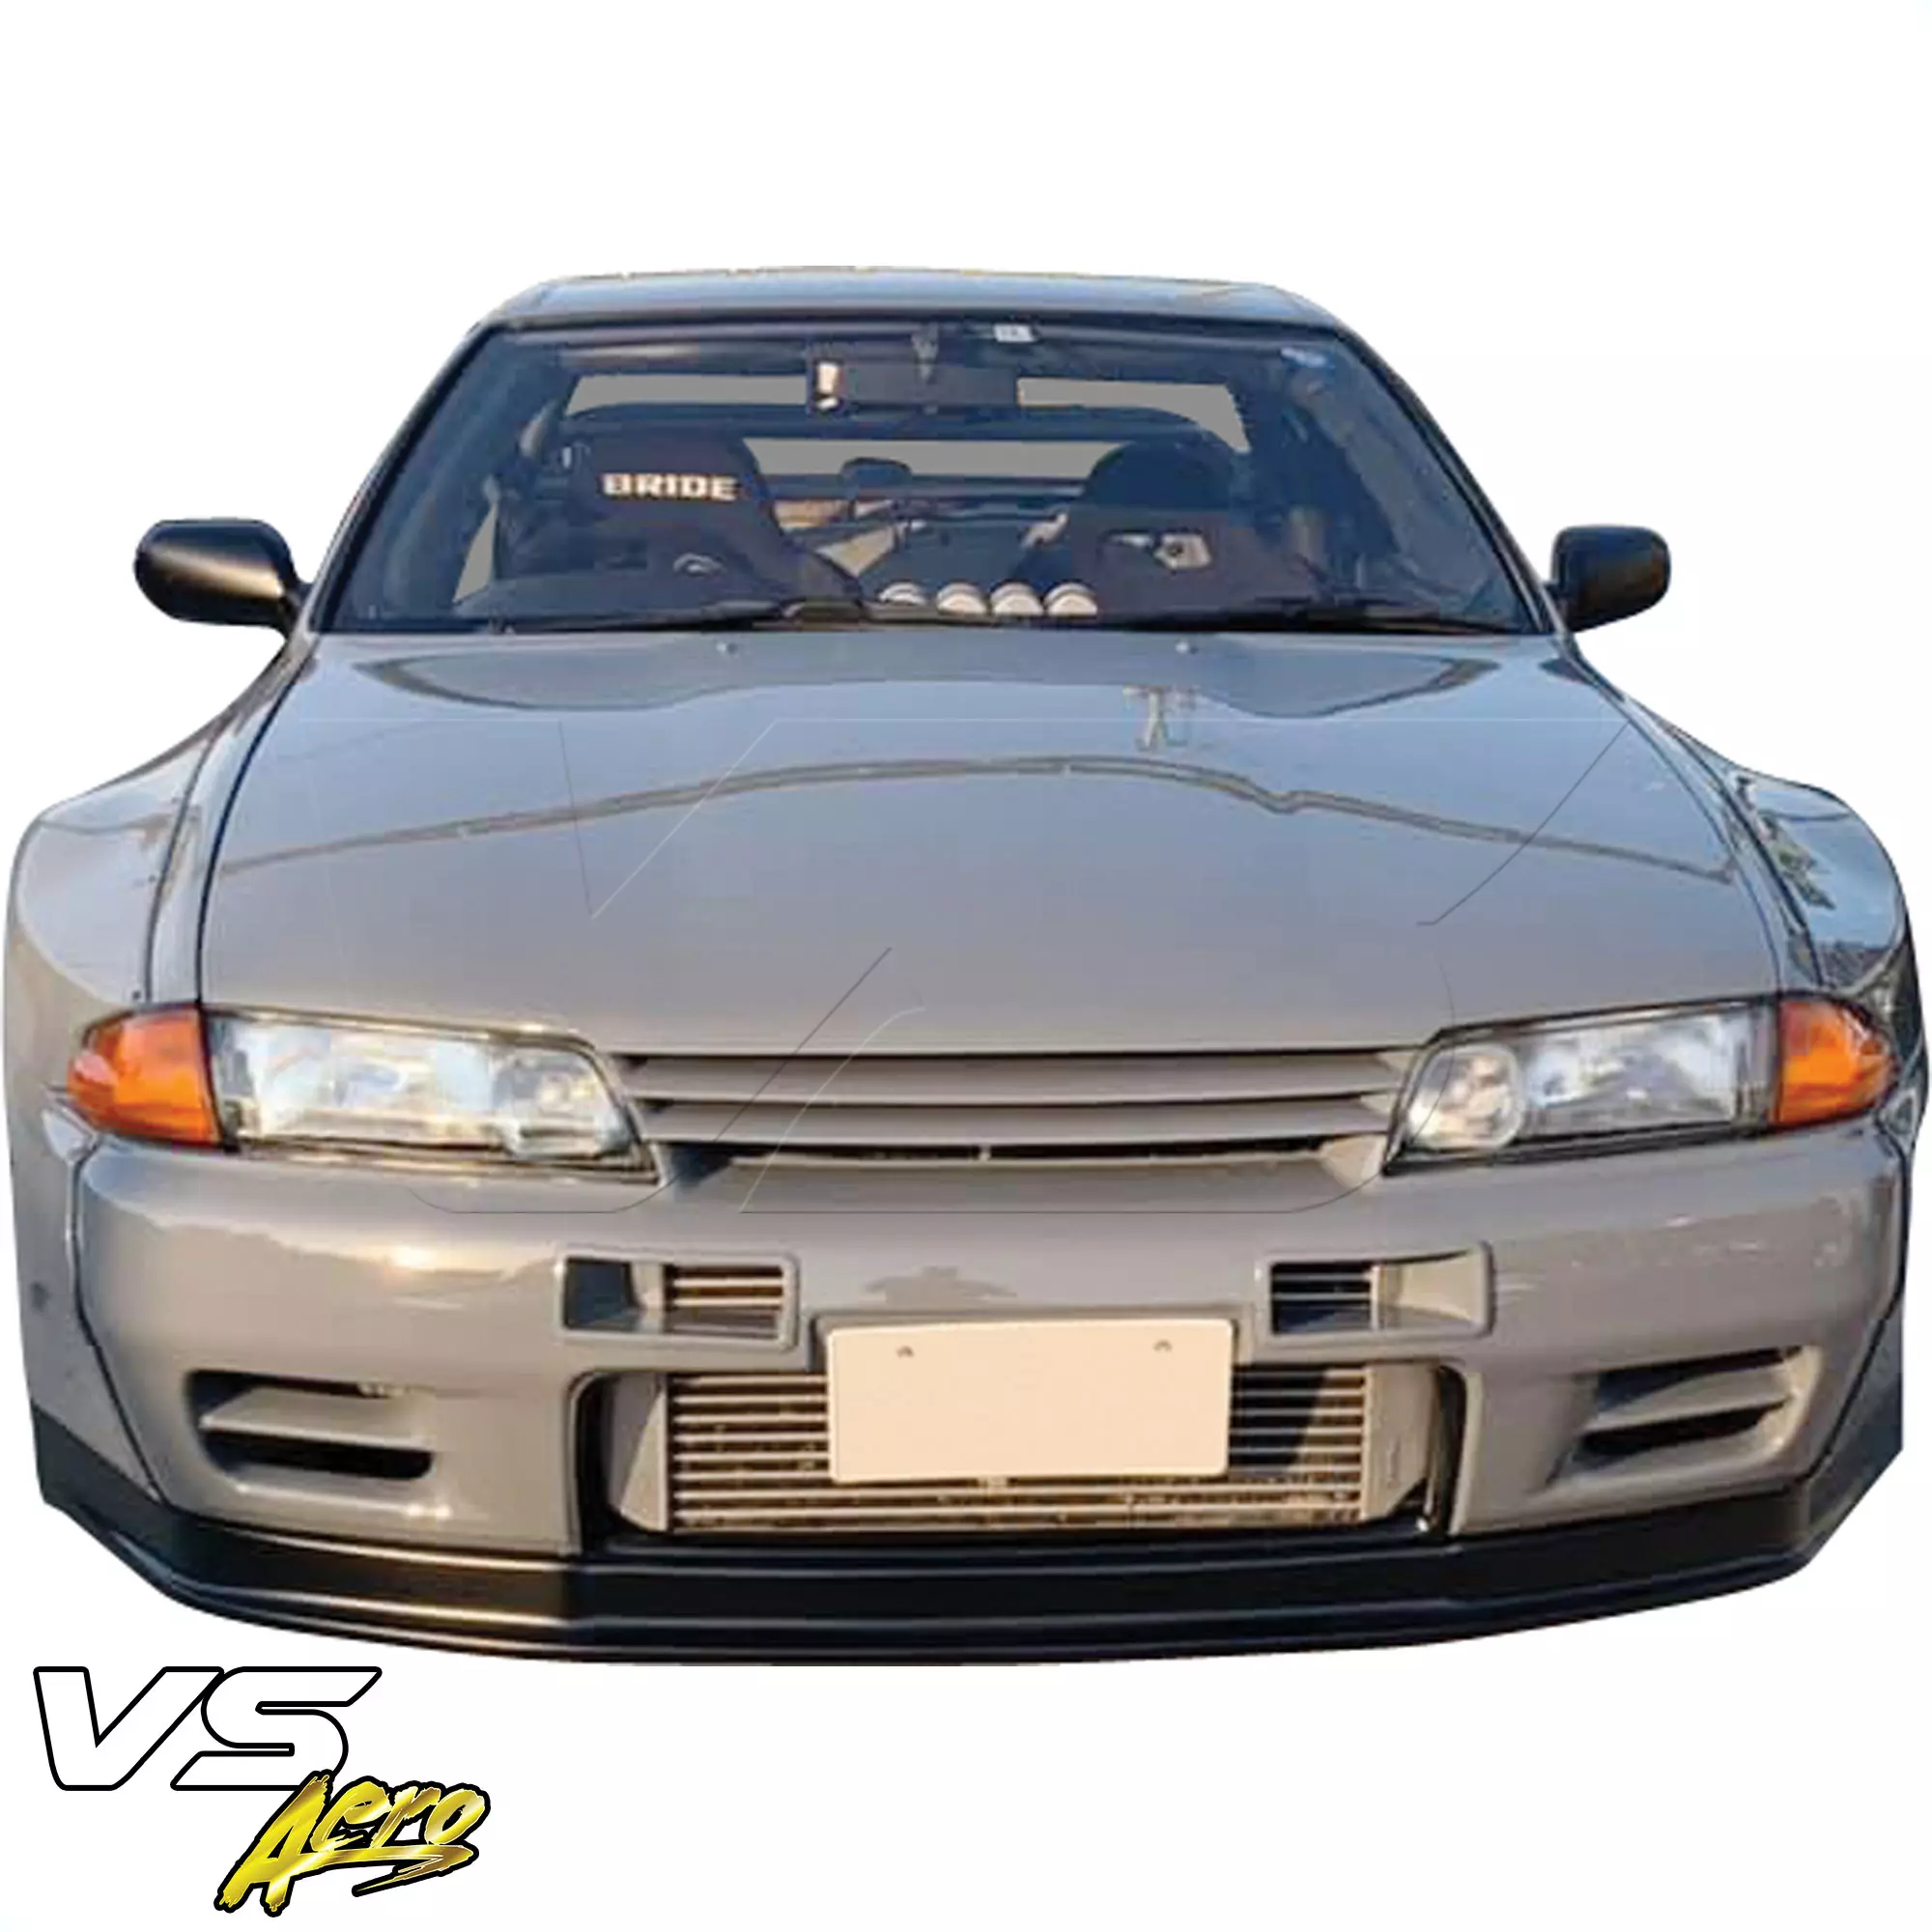 VSaero FRP TKYO Wide Body Kit > Nissan Skyline R32 1990-1994 > 2dr Coupe - Image 89